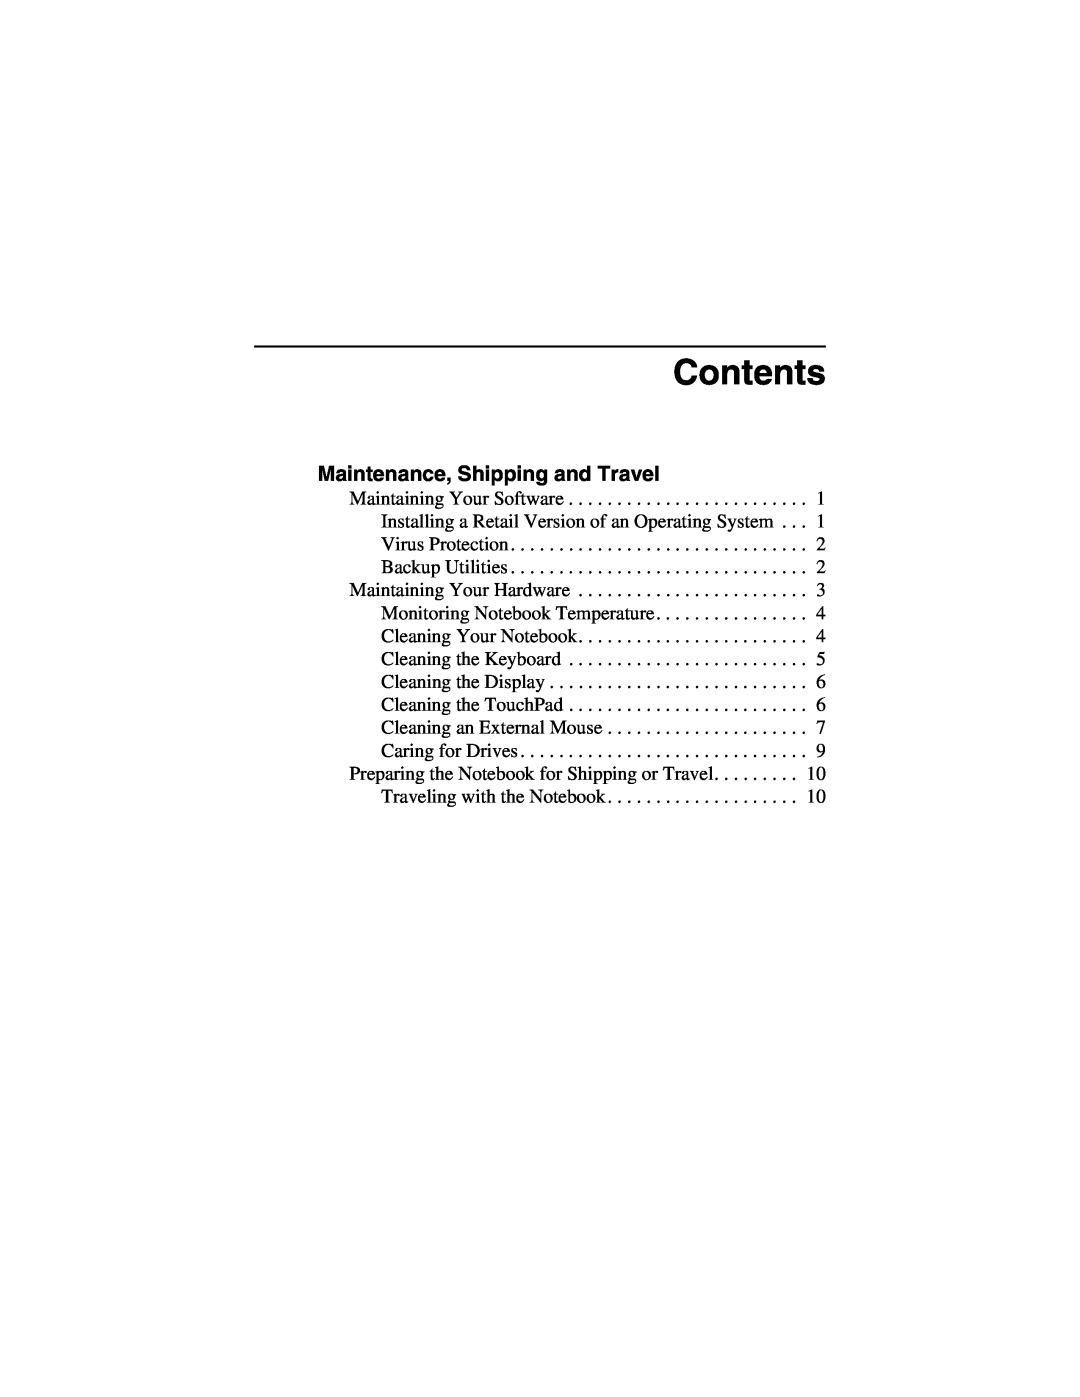 Compaq 267637-001 manual Contents, Maintenance, Shipping and Travel 